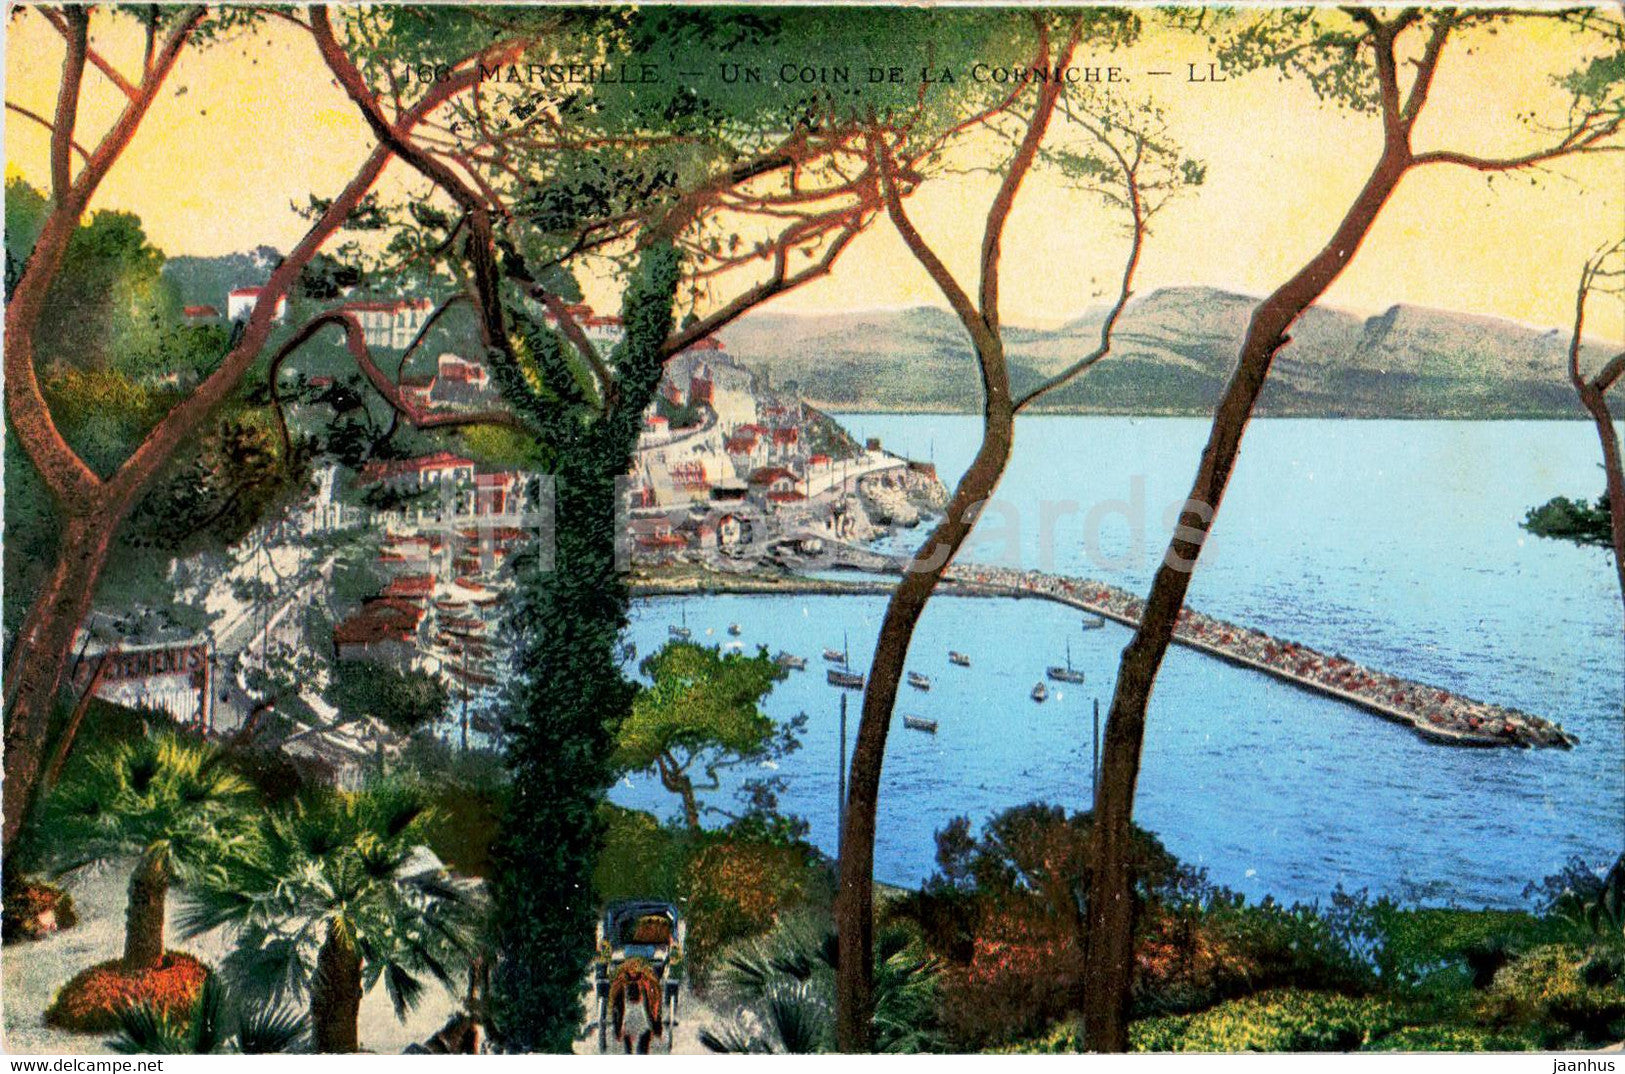 Marseille - Un Coin de la Corniche - 166 - old postcard - France - unused - JH Postcards